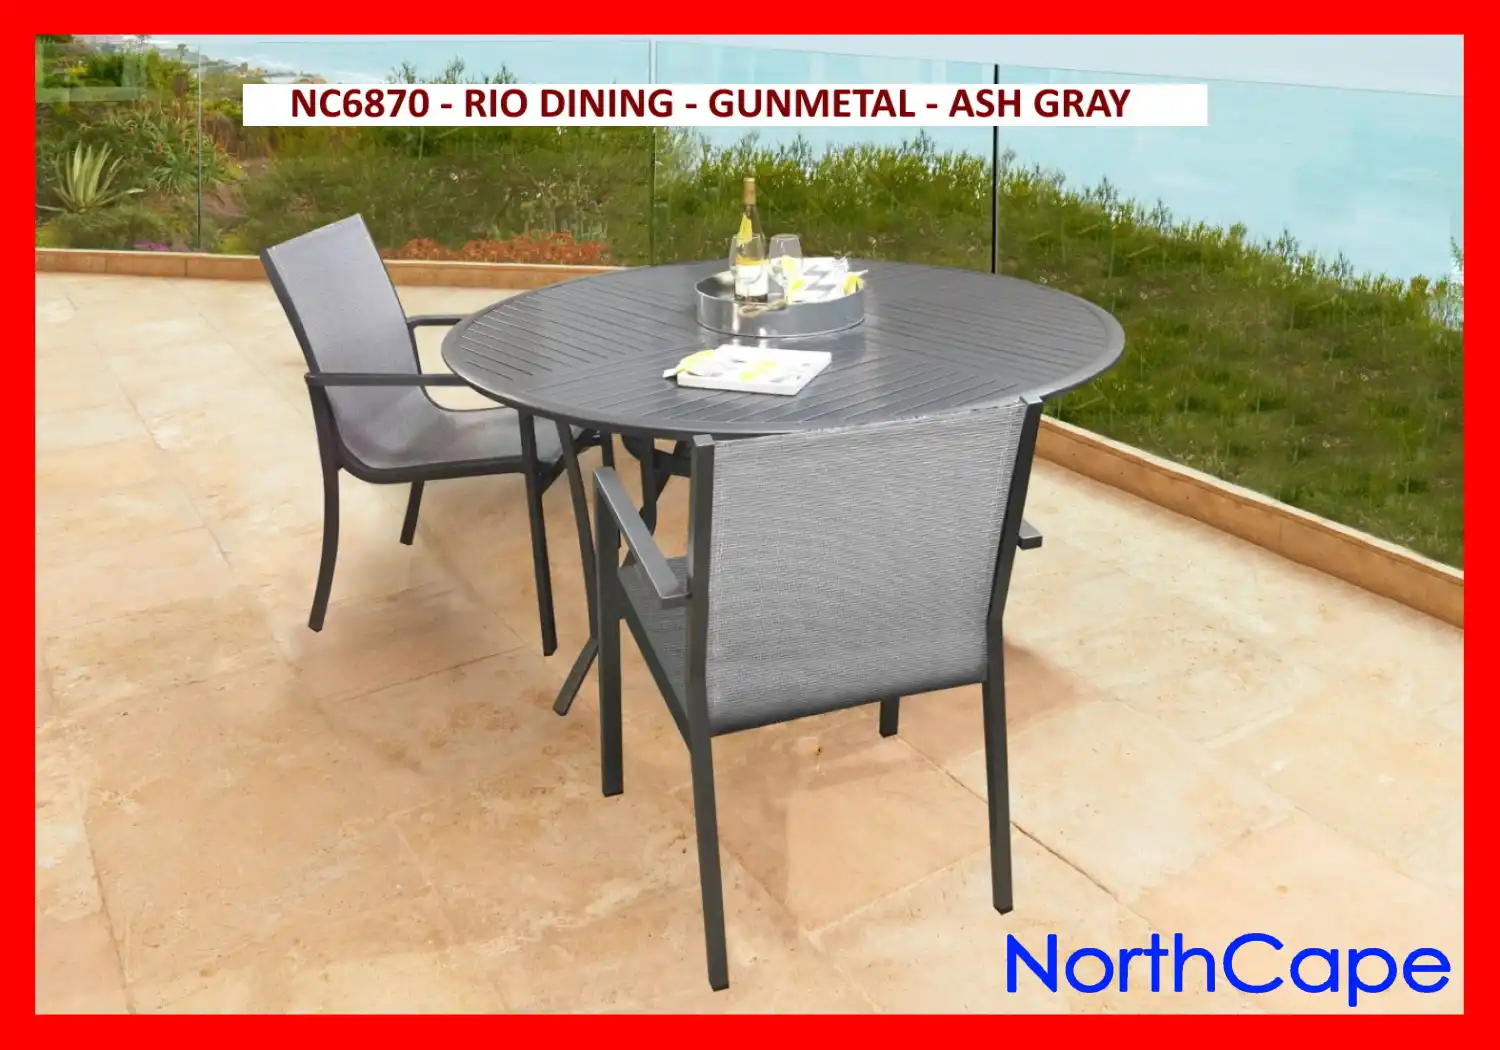 NC6870 - RIO DINING - GUNMETAL - ASH GRAY